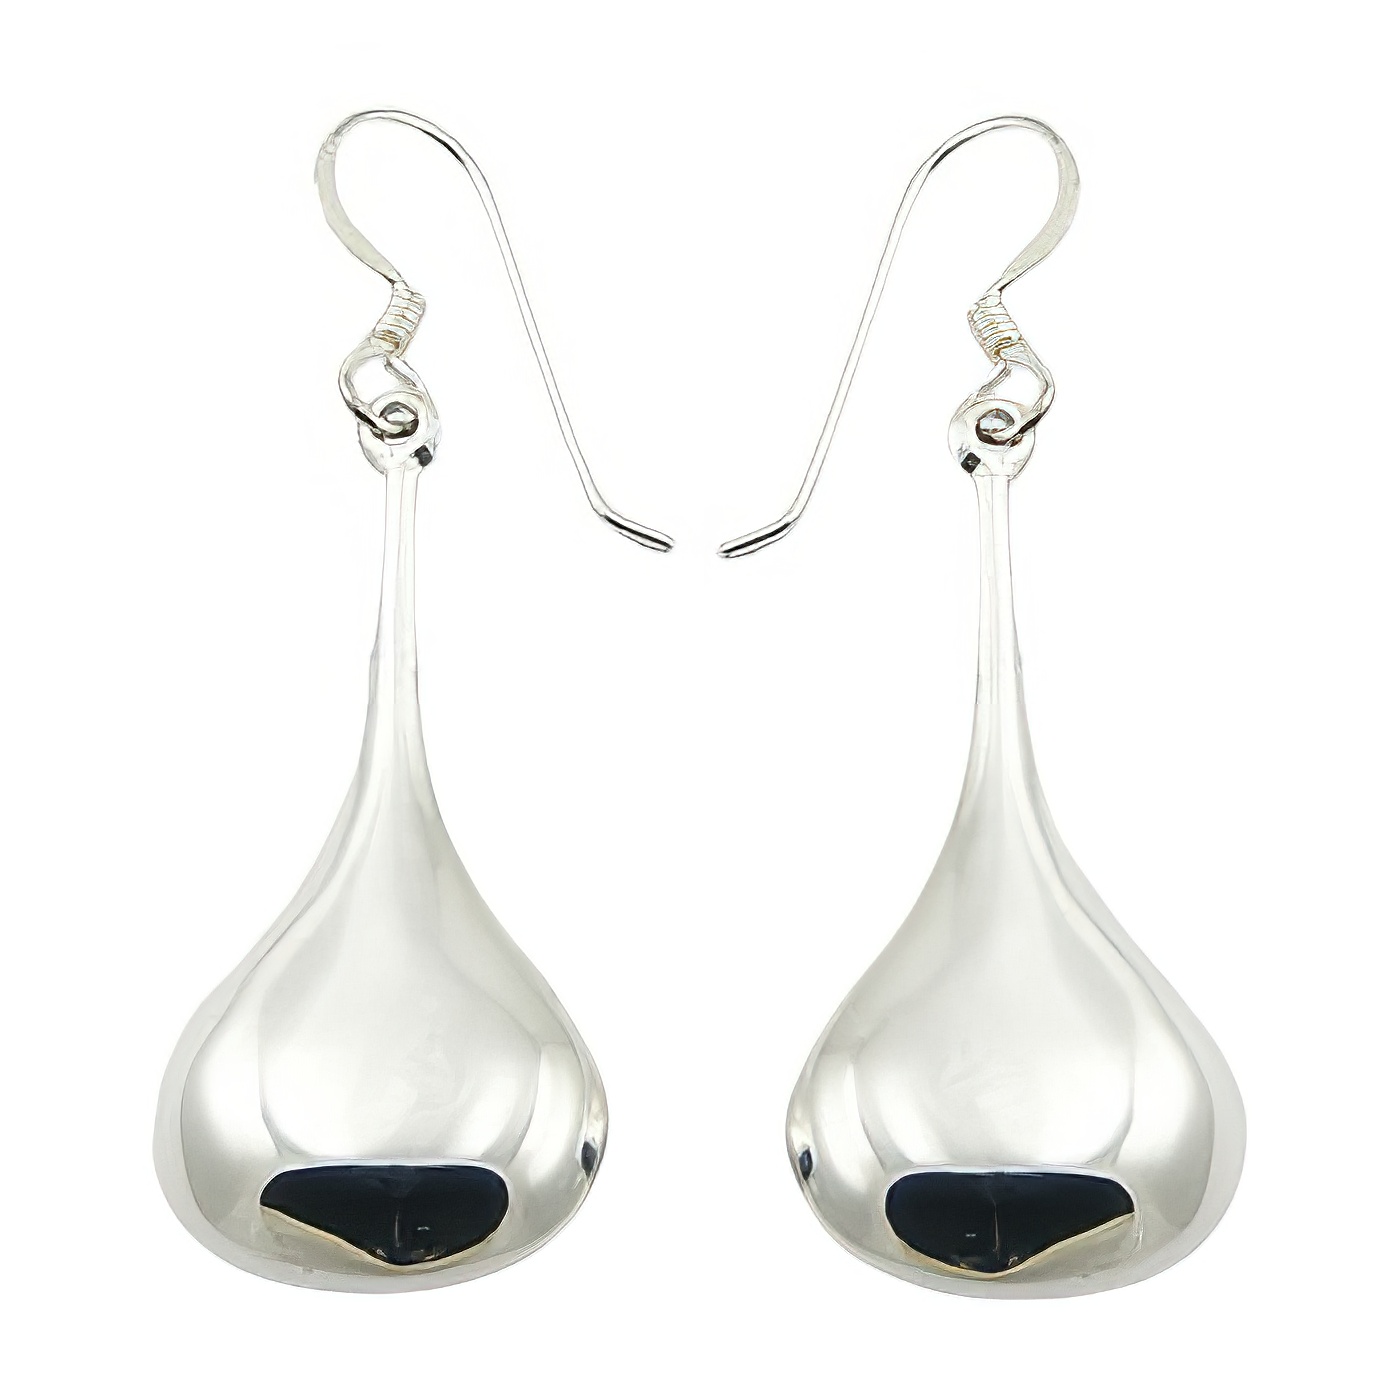 Classy Droplets Earrings Sterling Silver Danglers by BeYindi 